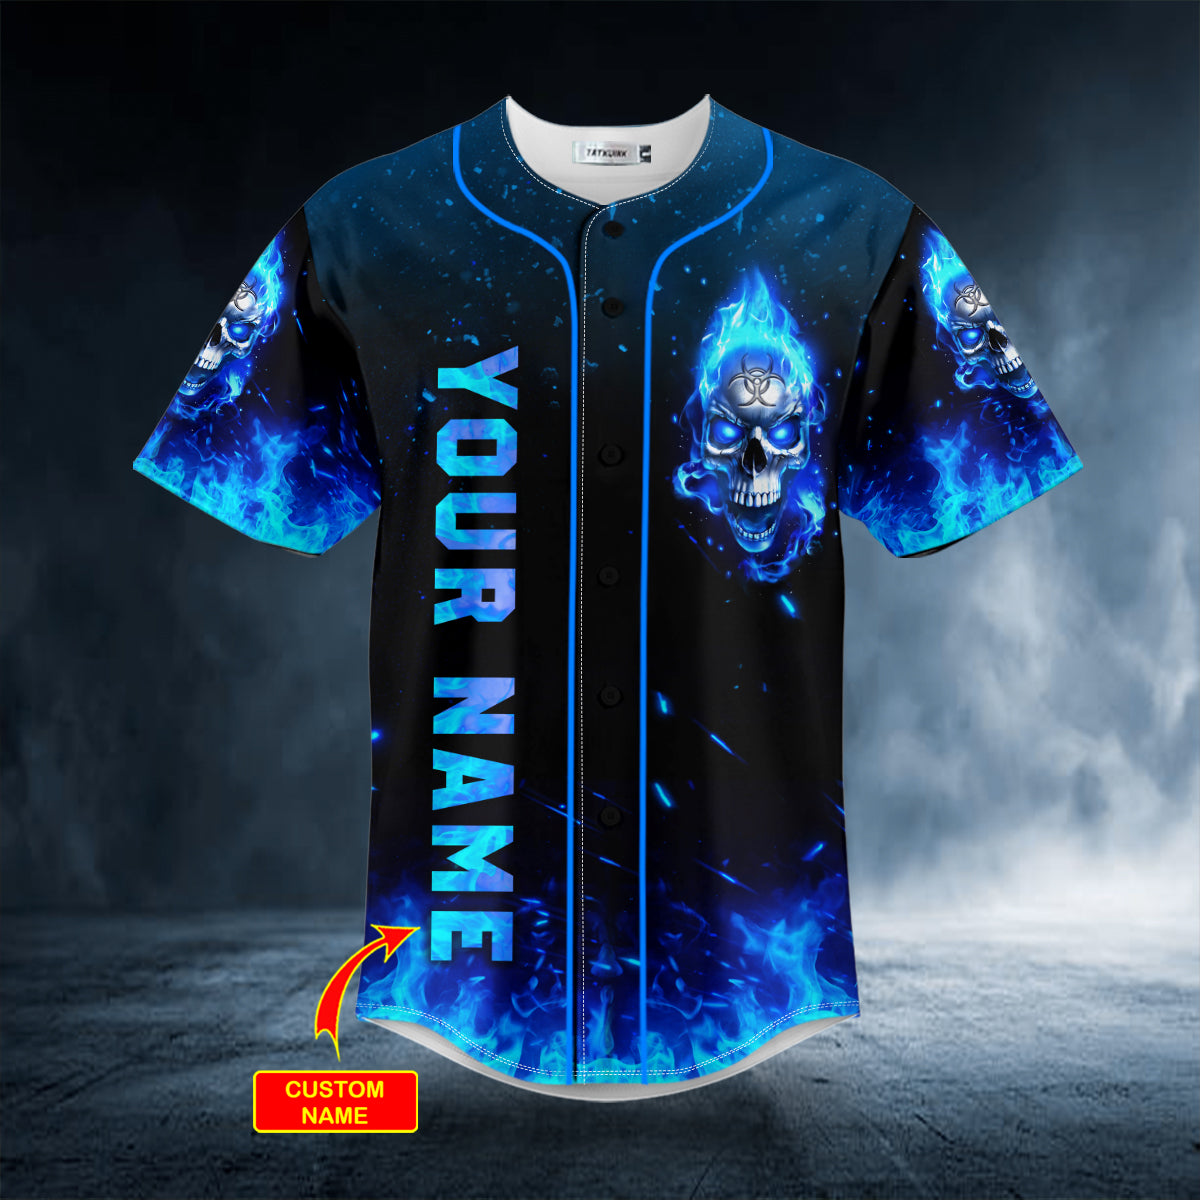 blue flaming biohazard tribal metal skull custom baseball jersey bsj 948 drhx2